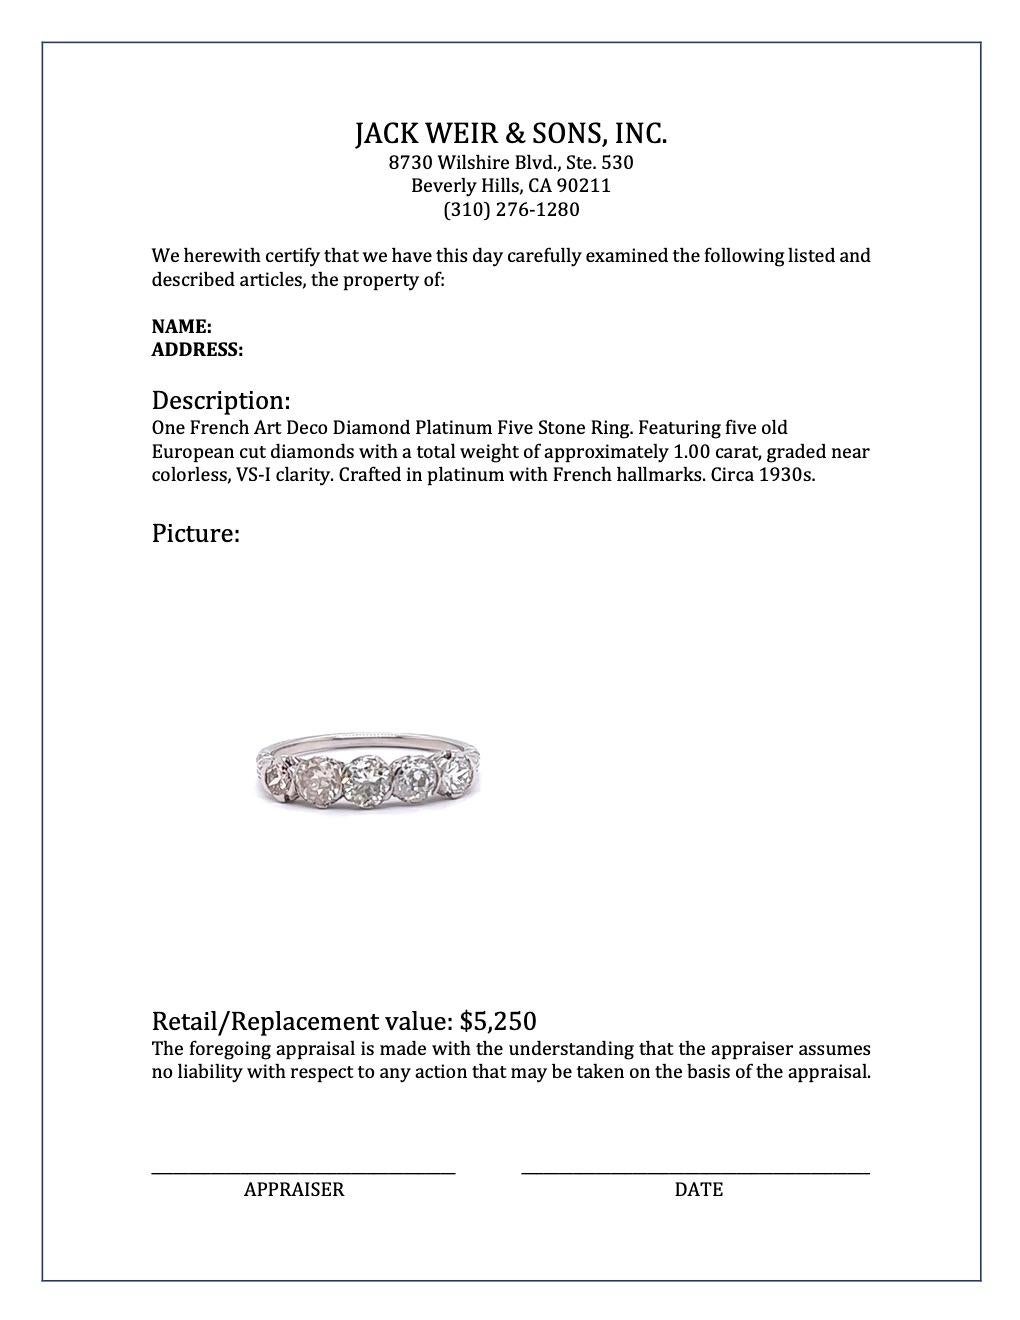 French Art Deco Diamond Platinum Five Stone Ring 1